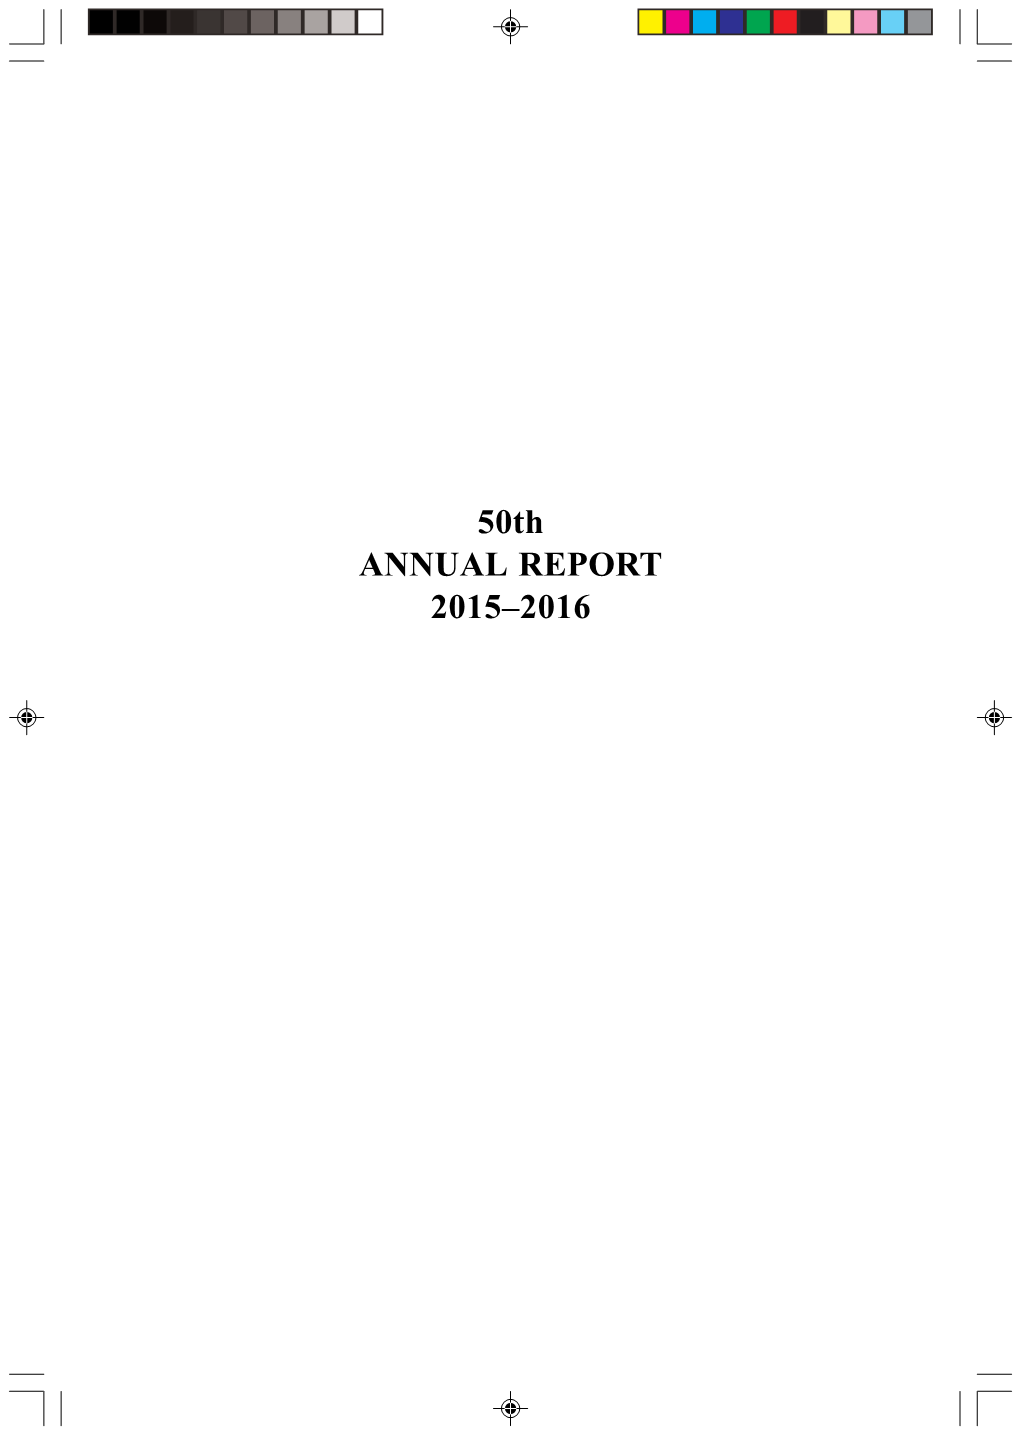 Annual Report English 2015-16.P65